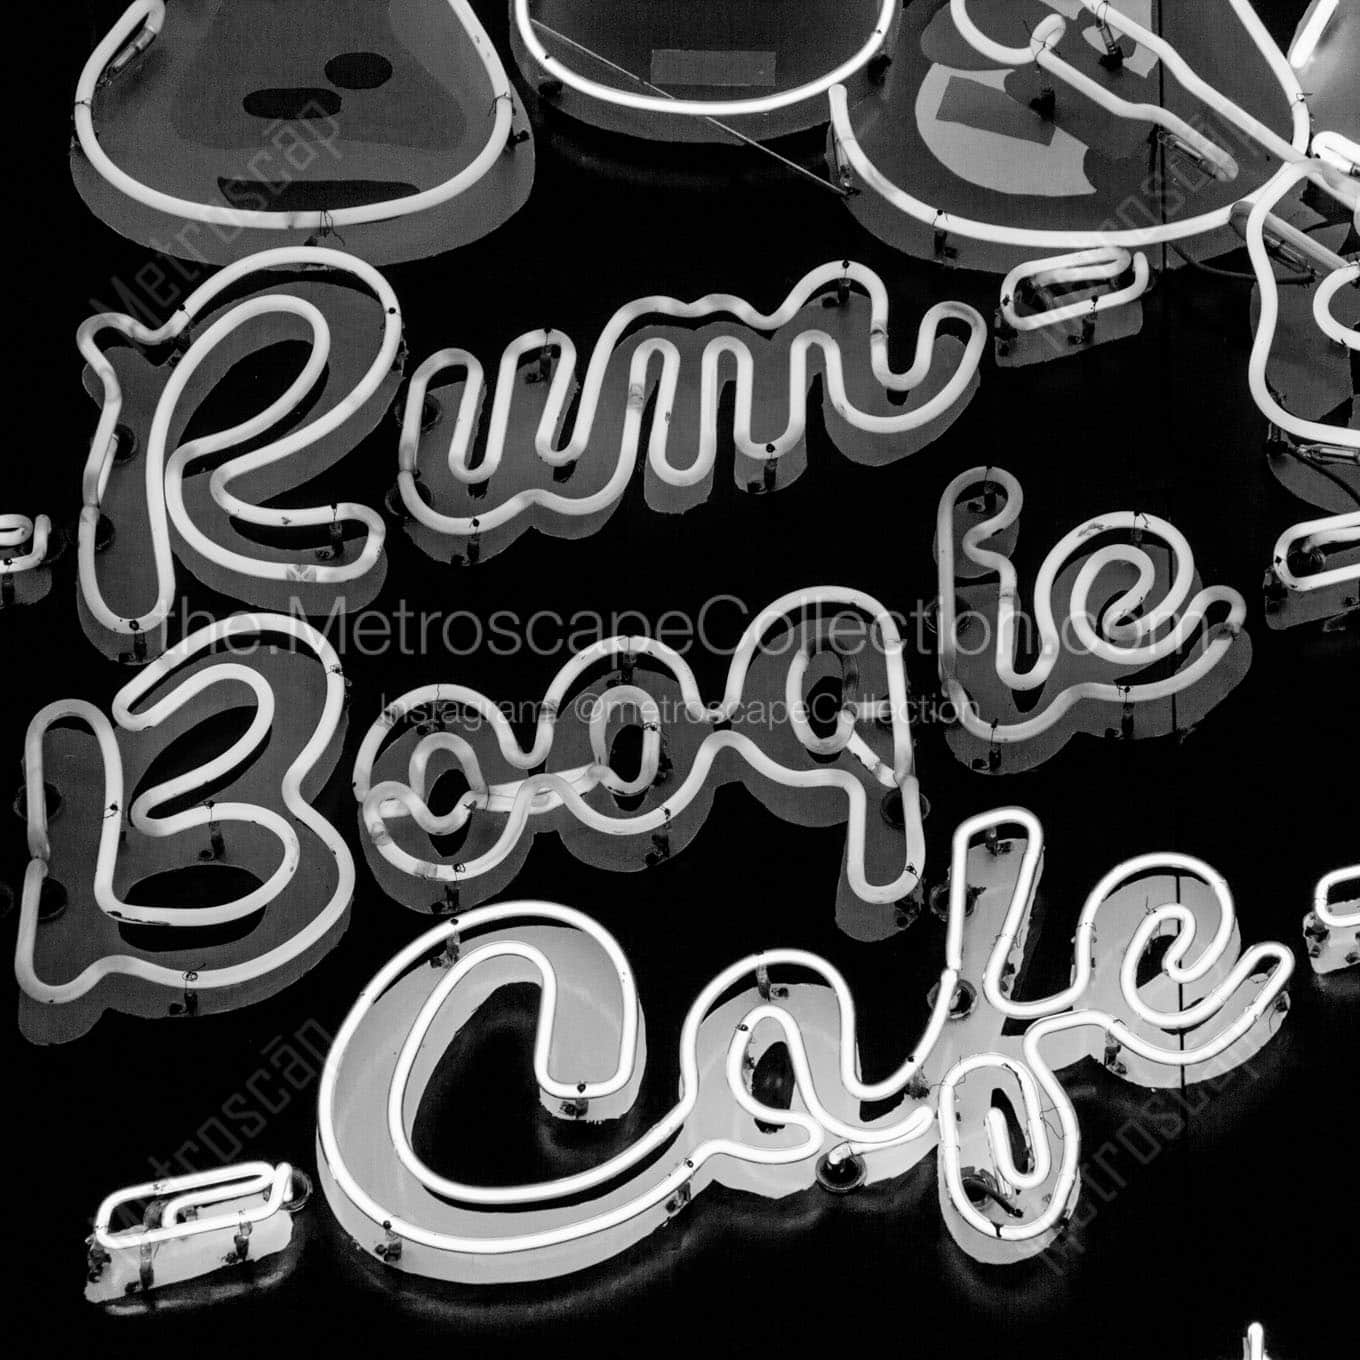 rum boogie cafe Black & White Wall Art